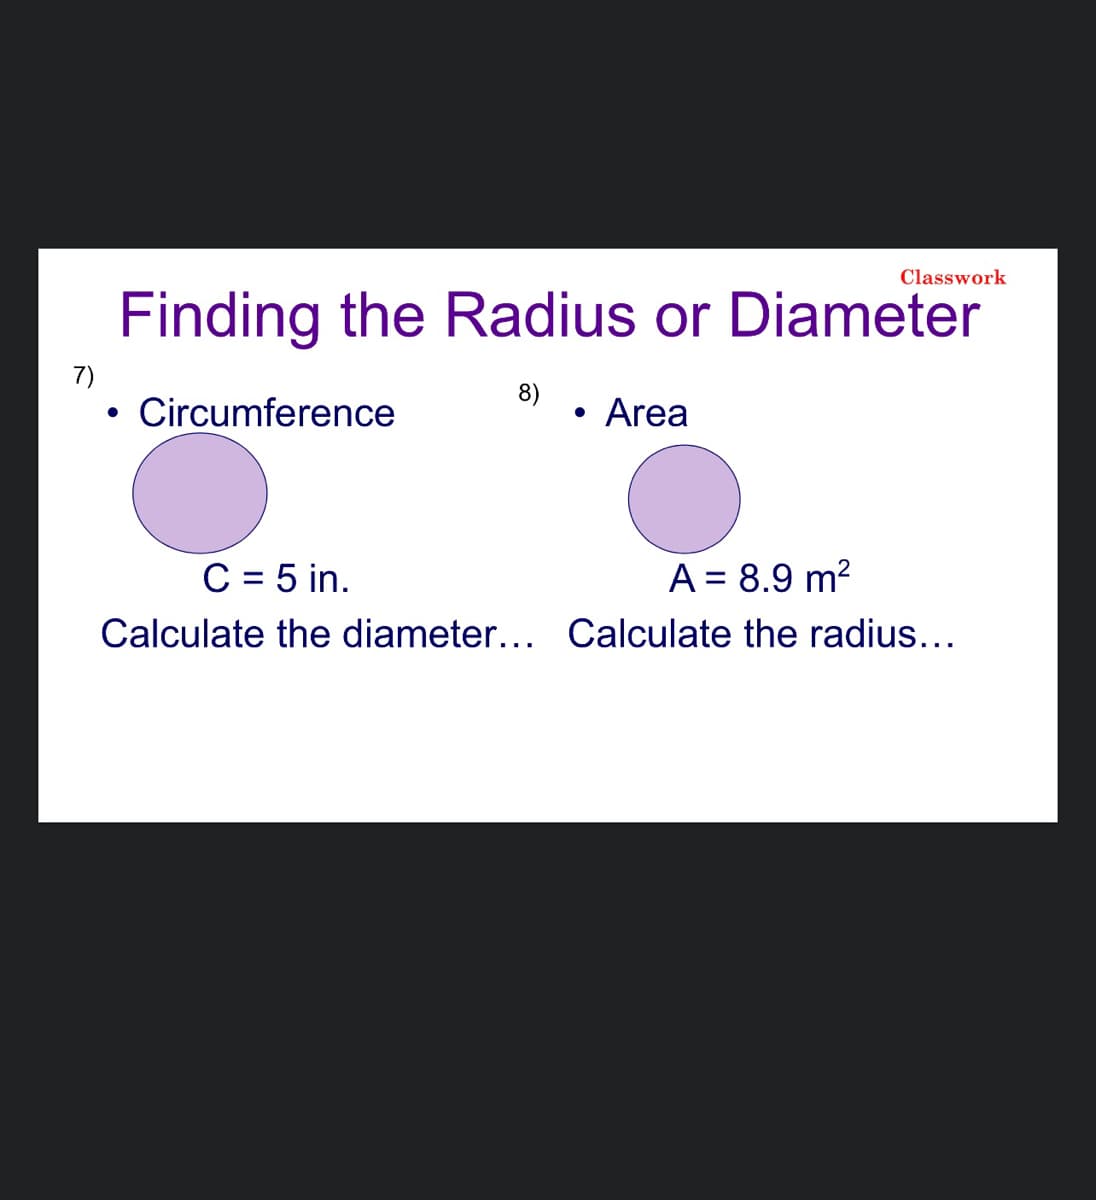 Classwork
Finding the Radius or Diameter
7)
8)
• Circumference
Area
C = 5 in.
A = 8.9 m?
Calculate the diameter... Calculate the radius...
